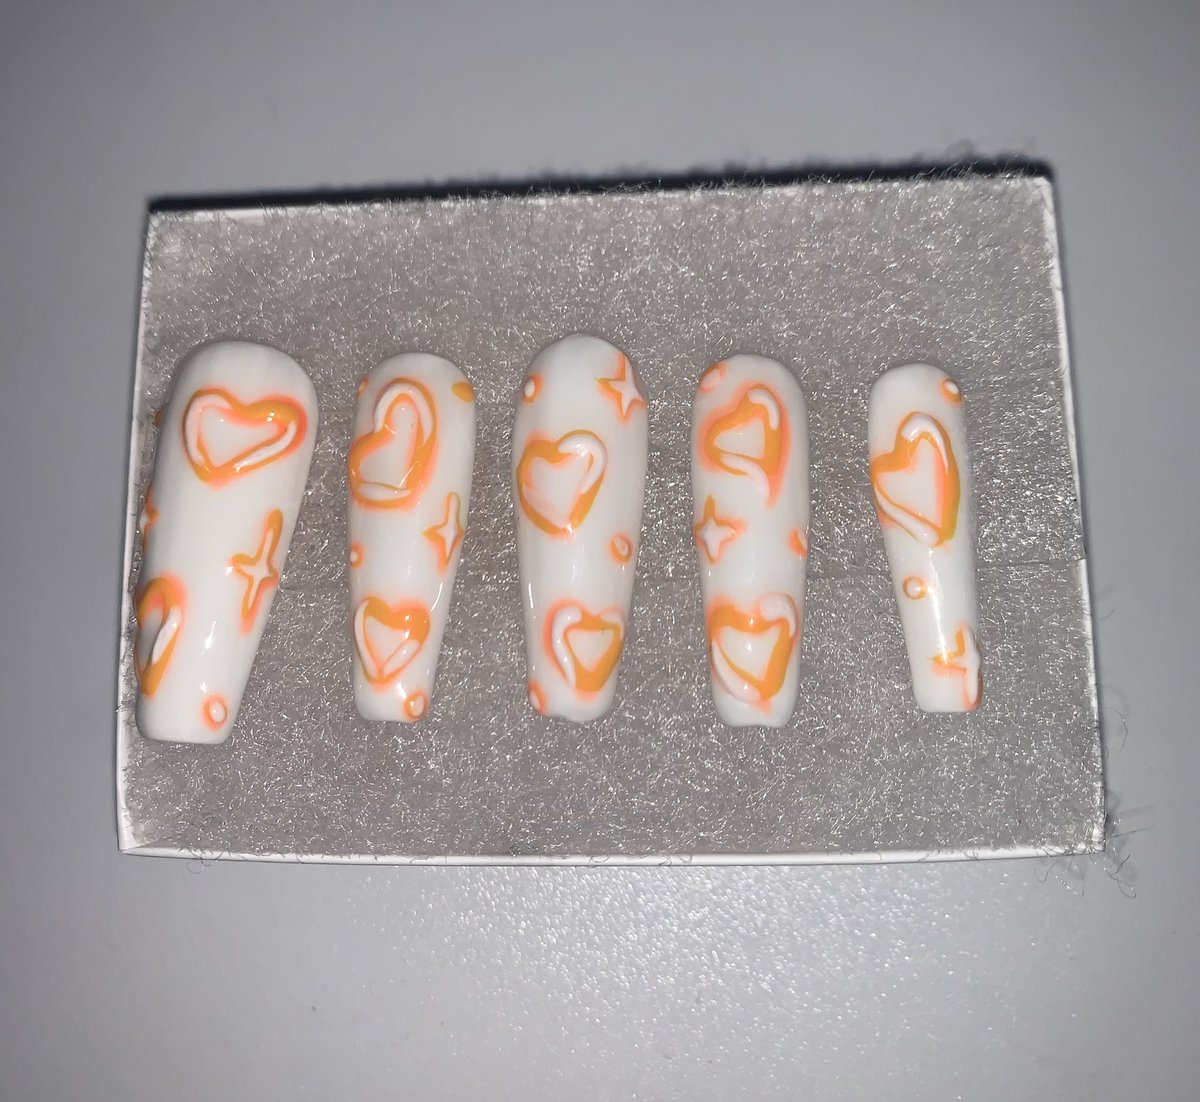 90’s Airbrush 

#orangenails #jellynails #whitenails #airbrushnails #airbrush #cxdvshx #klickityklack #coffinnails #supportsmallbusiness #supportblackbusiness #pressonnails